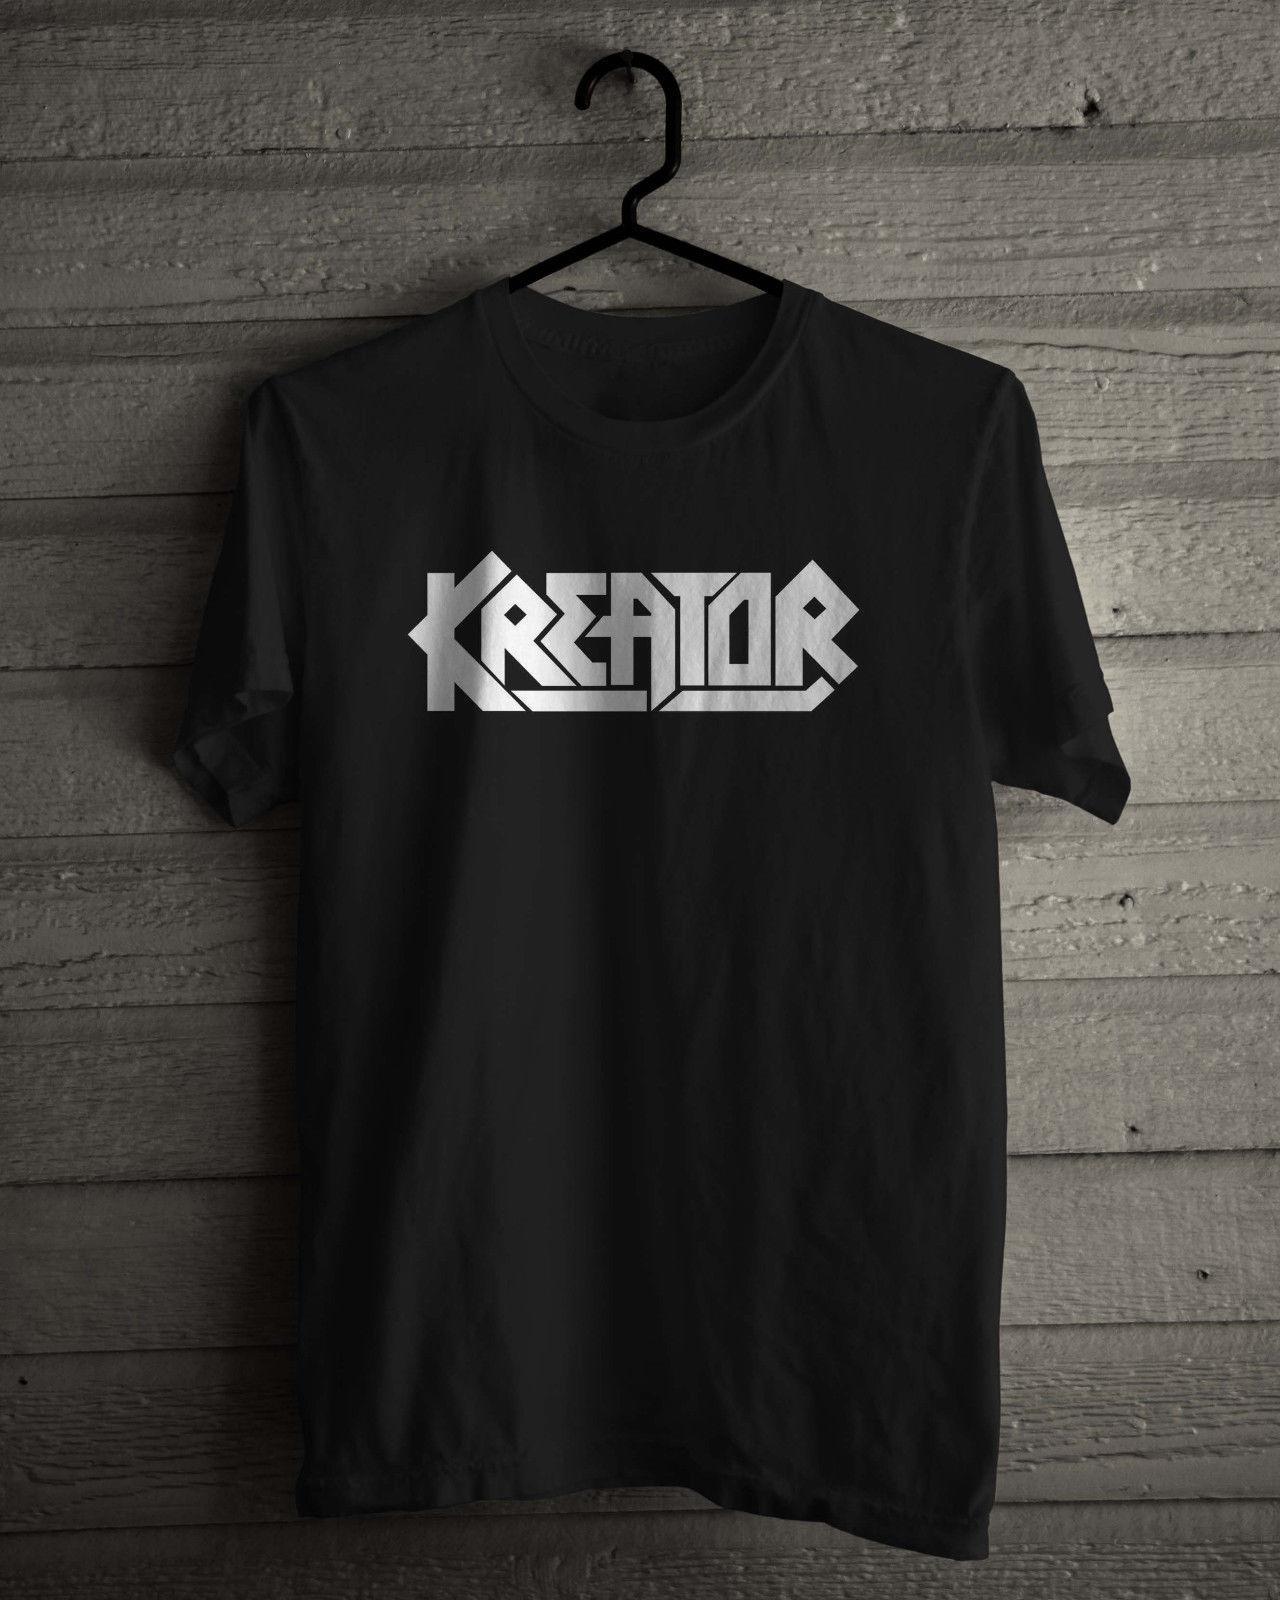 German Clothing Logo - Kreator T Shirt, Logo German Thrash Metal Band Destruction And Sodom